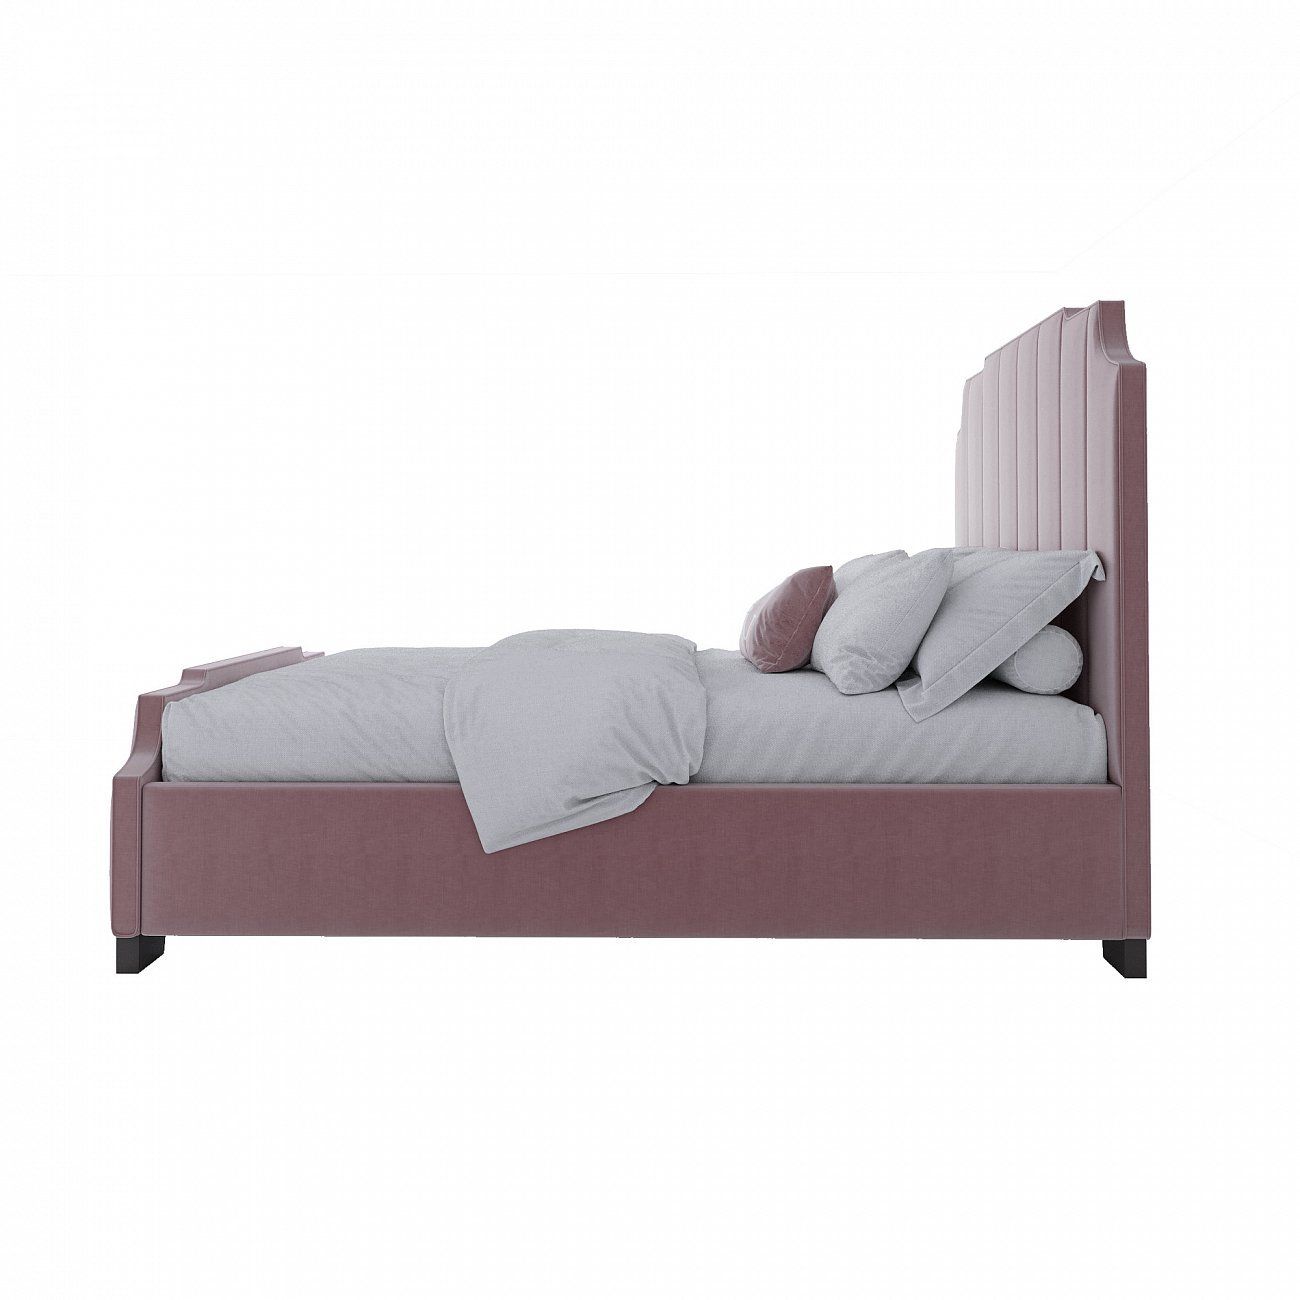 Кровать Bony двуспальная 160х200 см розовая